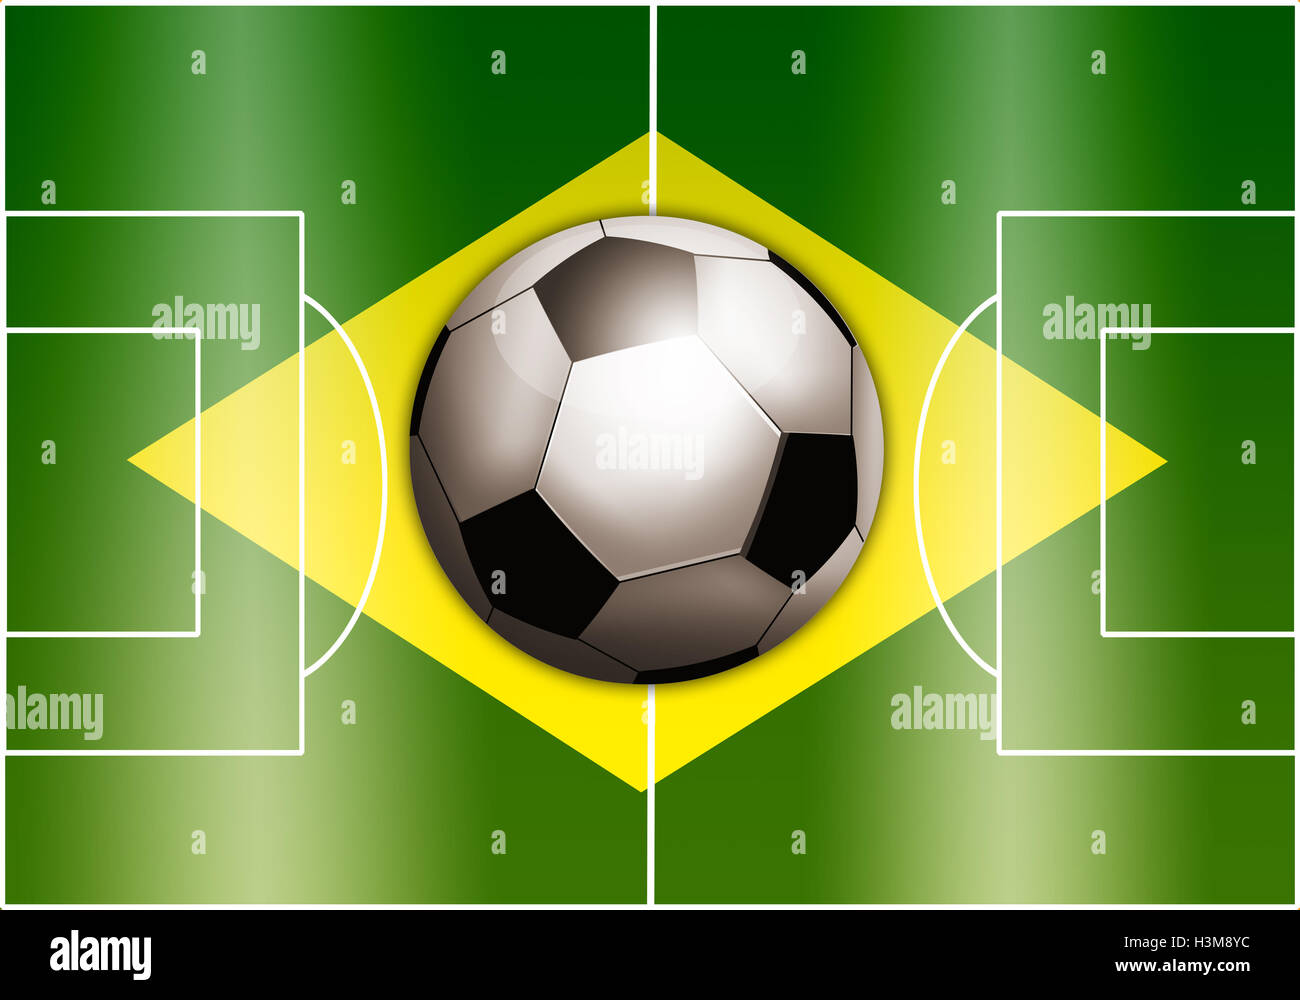 Soccer world cup in Brazil Stock Photo